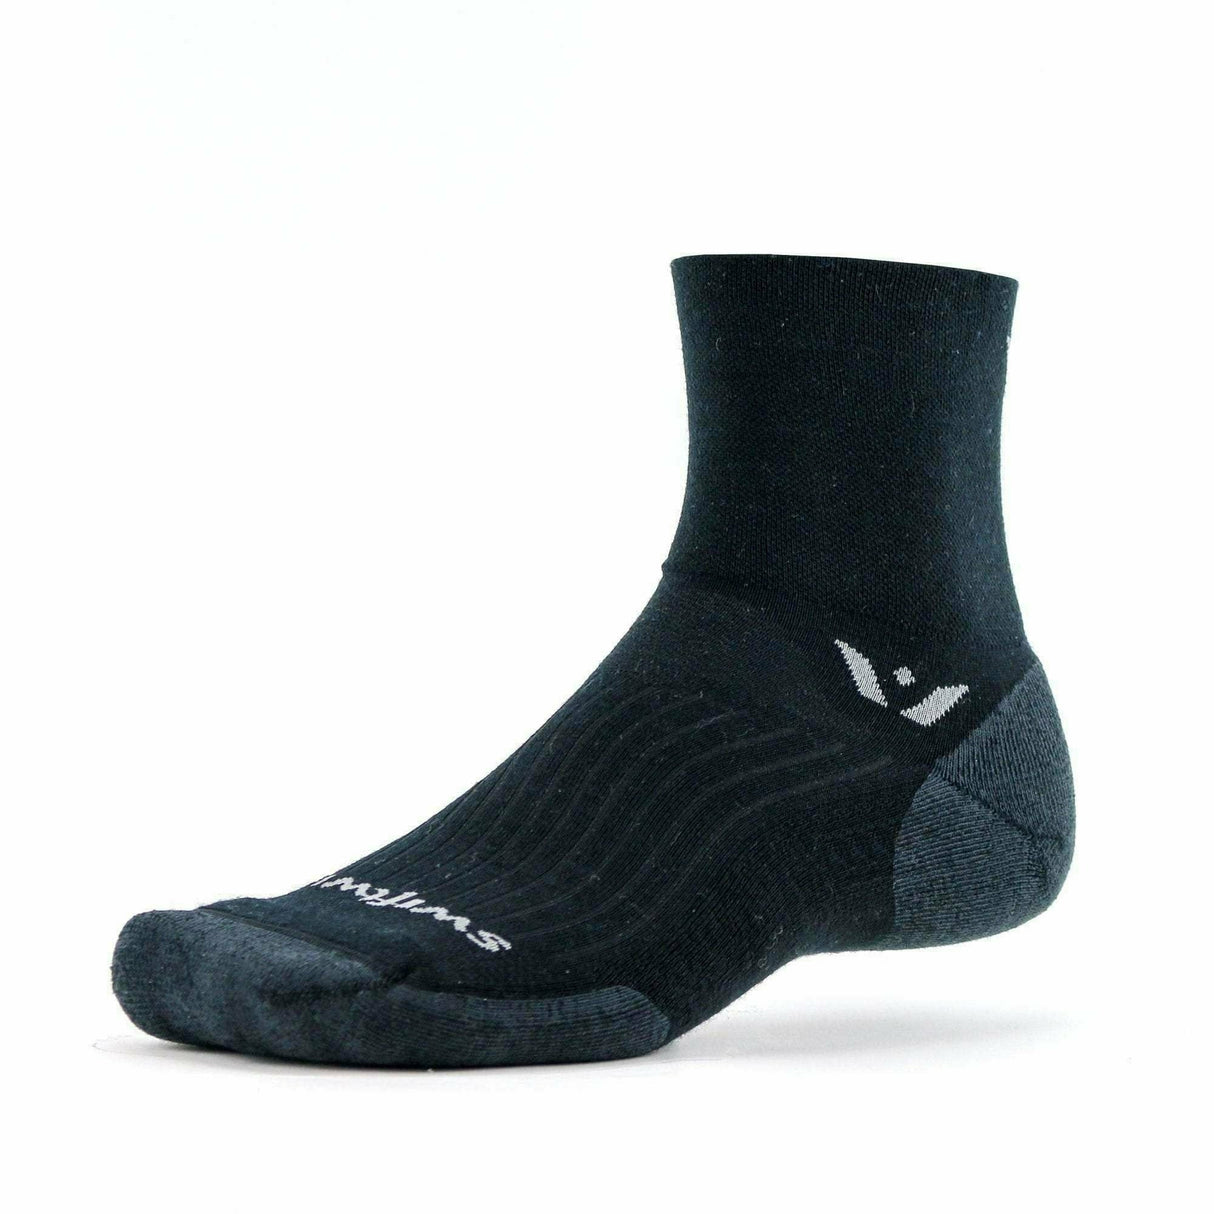 Swiftwick Pursuit Four Medium Socks  -  Small / Black